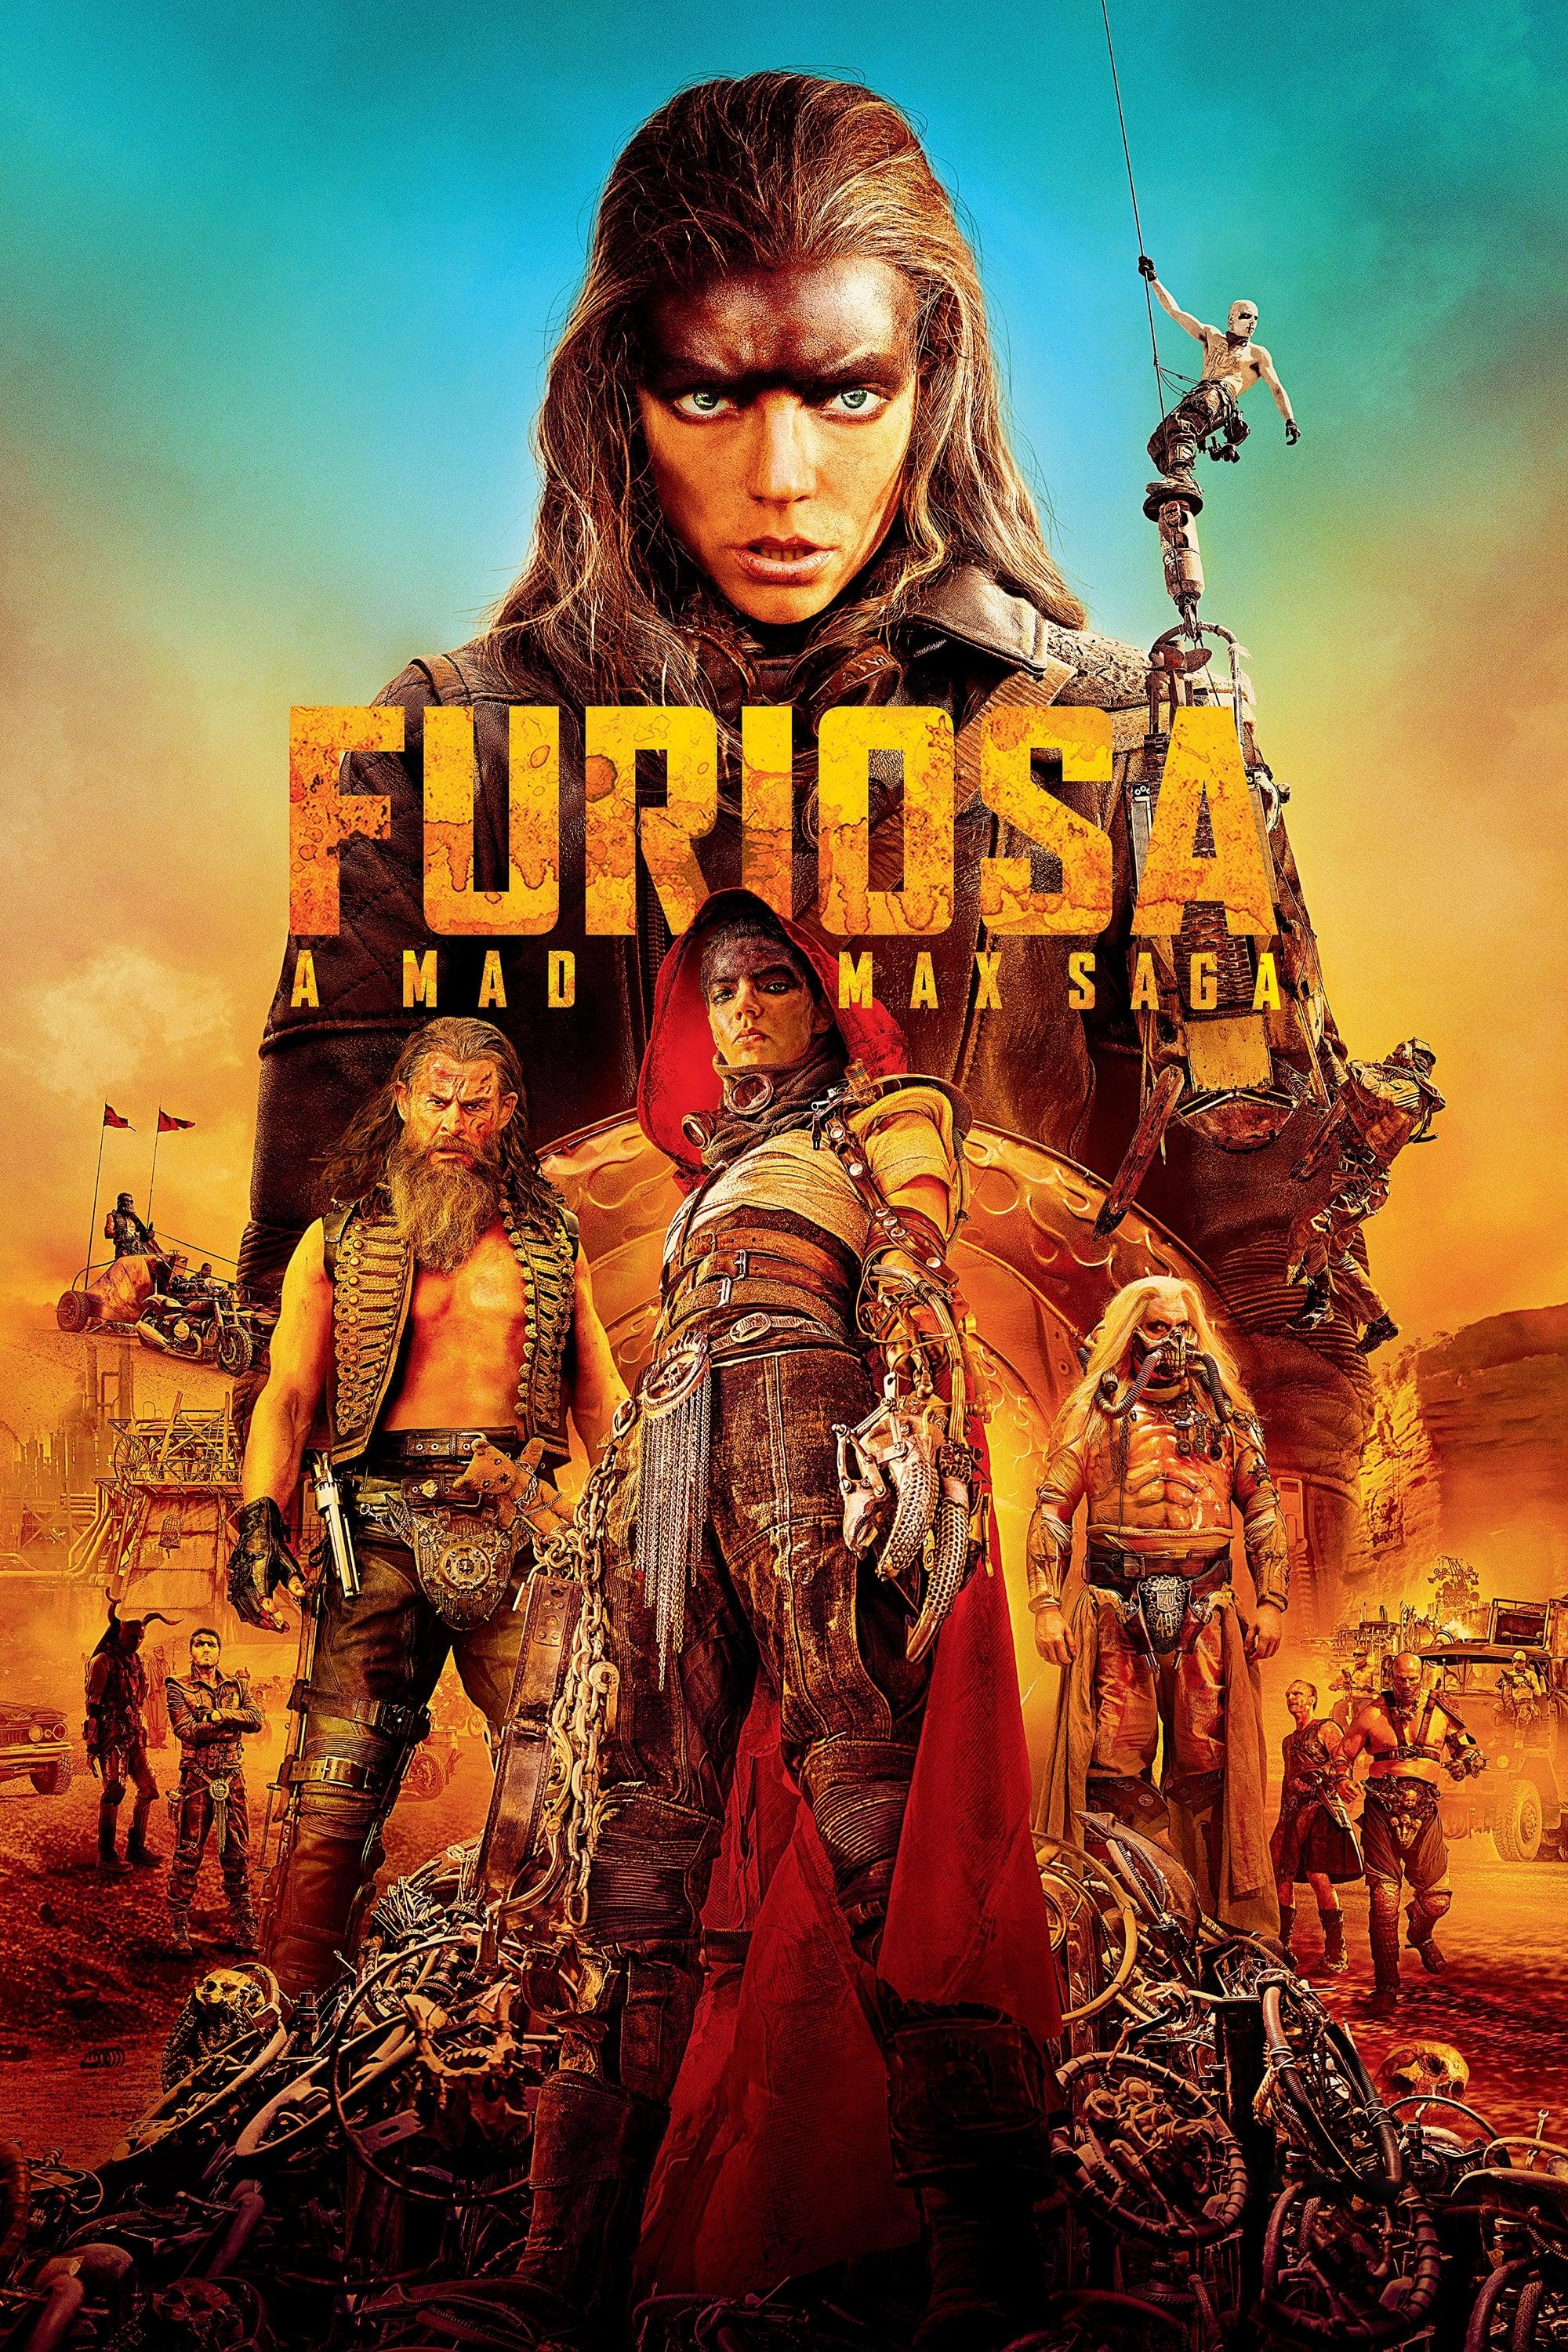 Movie poster of "Furiosa: A Mad Max Saga"